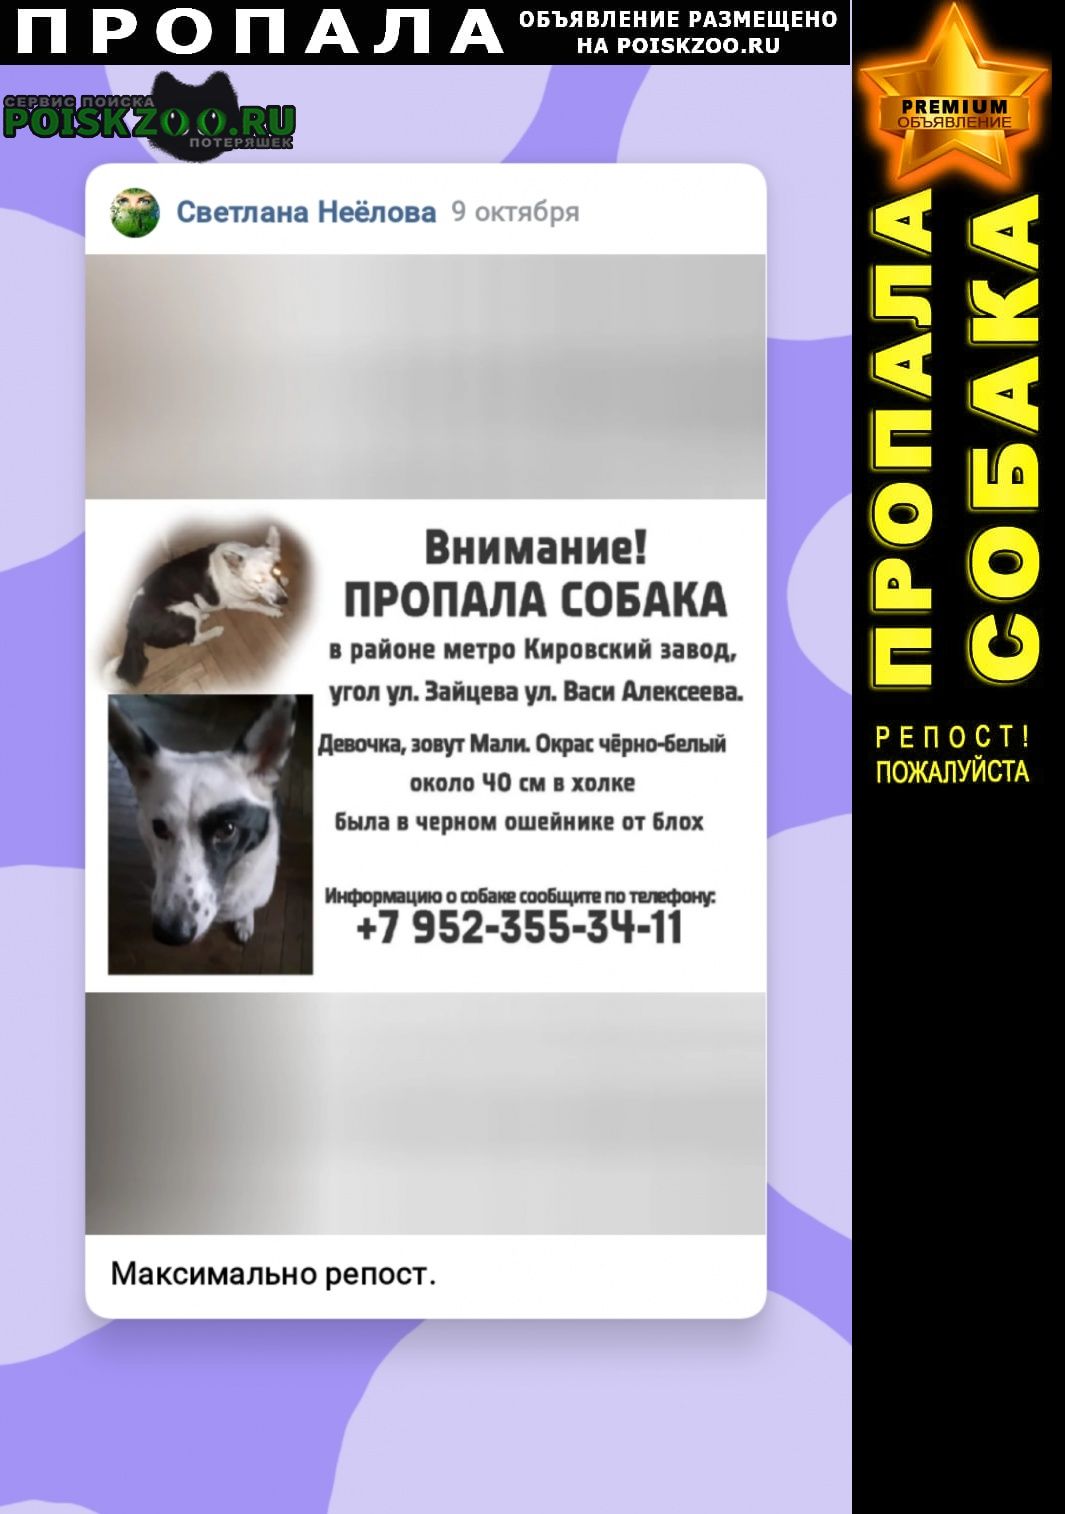 Пропала собака помогите пожалуйста найти собаку Санкт-Петербург